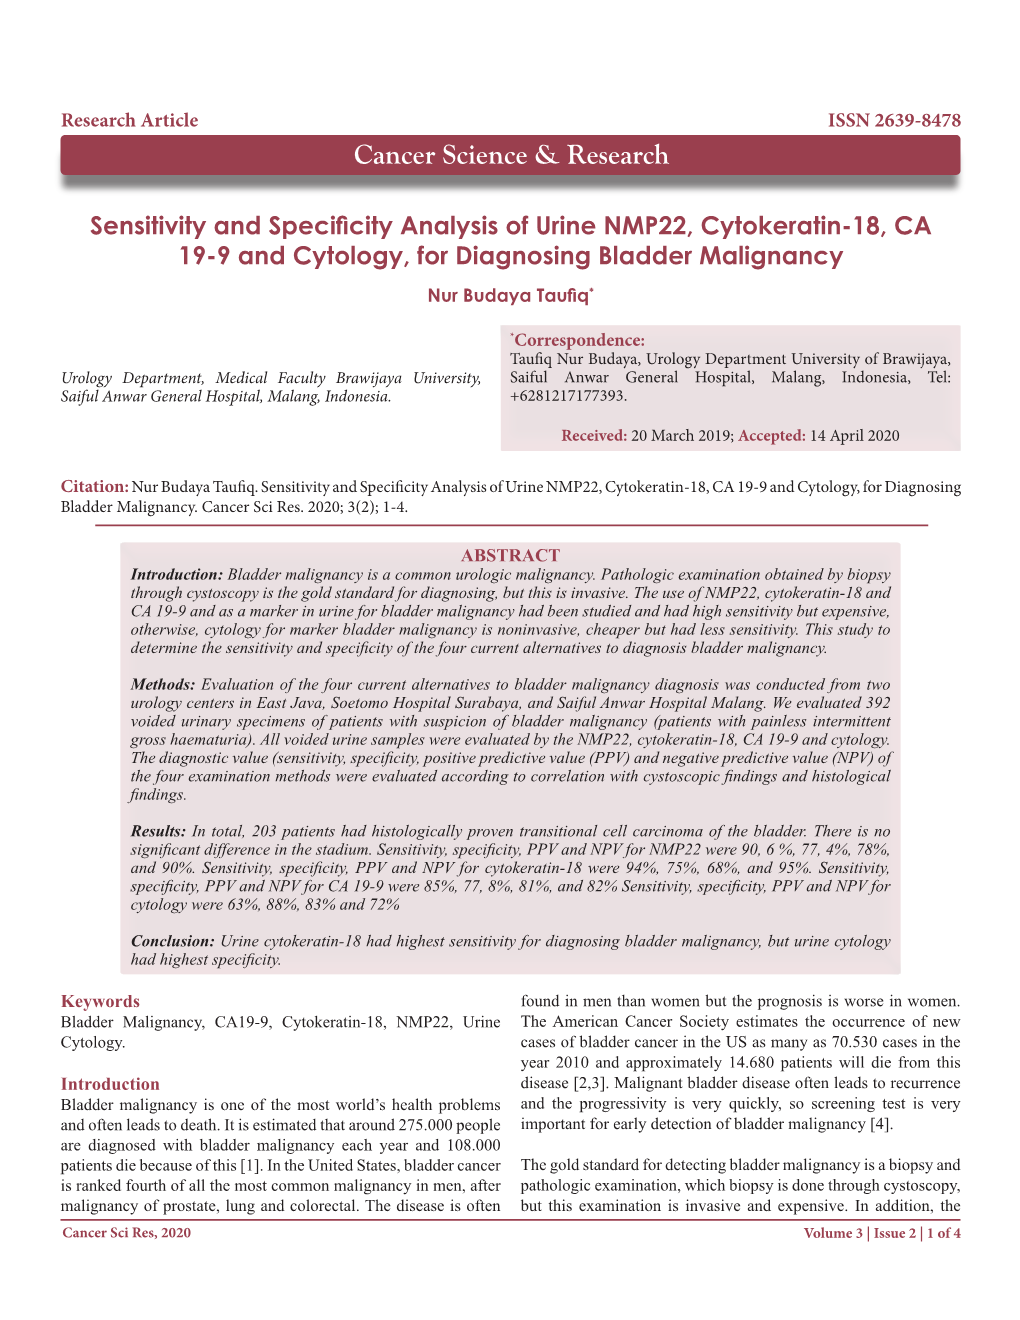 Sensitivity and Specificity Analysis of Urine NMP22, Cytokeratin-18, CA 19-9 and Cytology, for Diagnosing Bladder Malignancy Nur Budaya Taufiq*